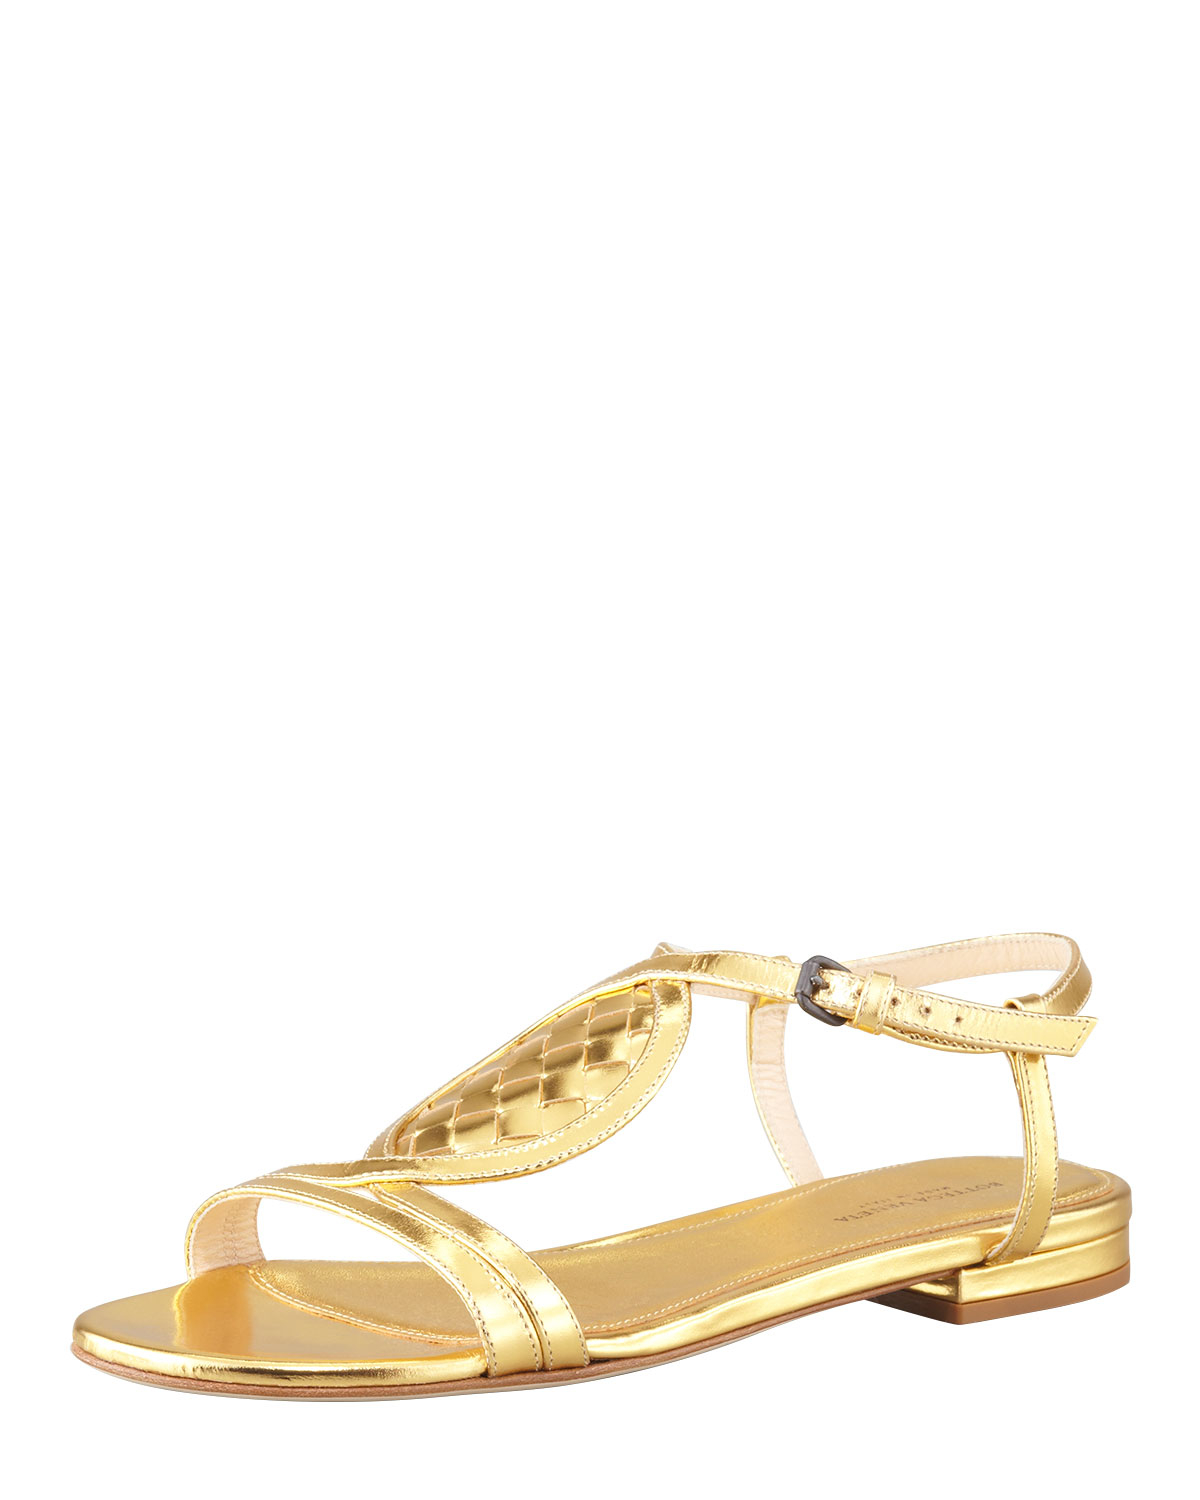 Bottega veneta Metallic Woven Leather Thong Sandal in Gold (SAVANA) | Lyst